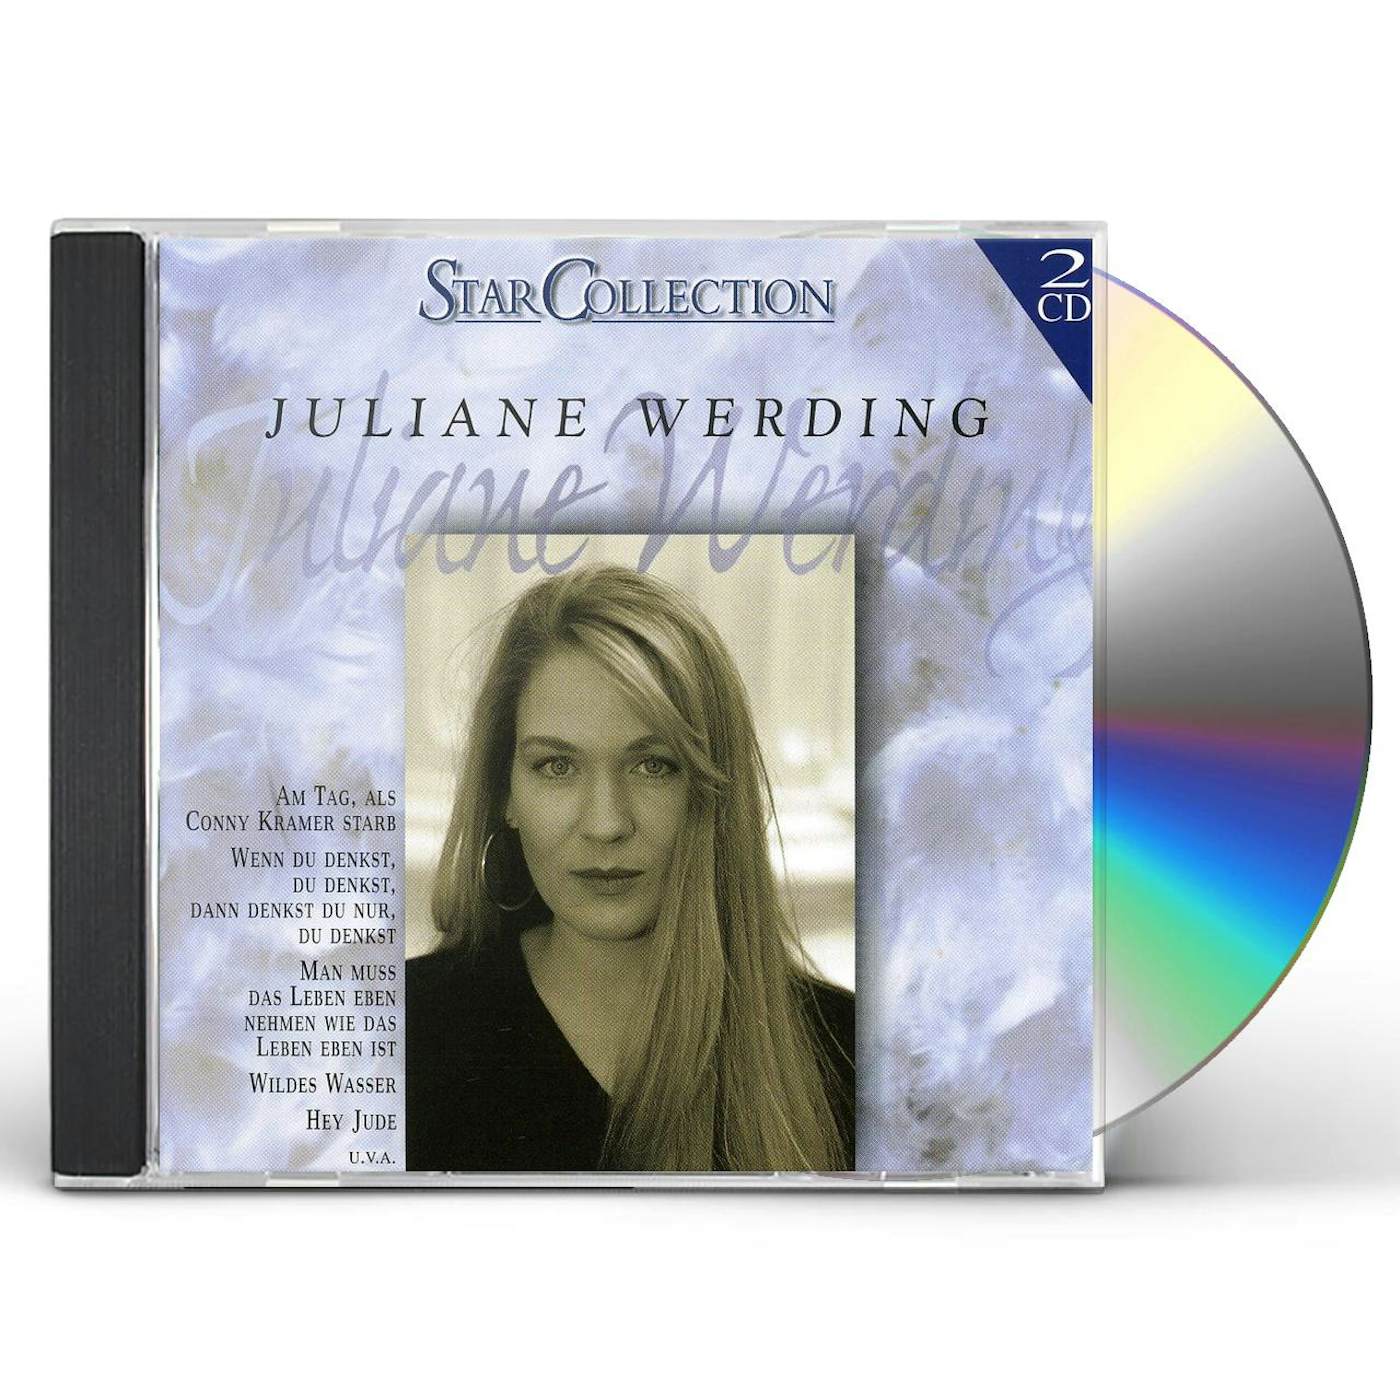 Juliane Werding STARCOLLECTION CD